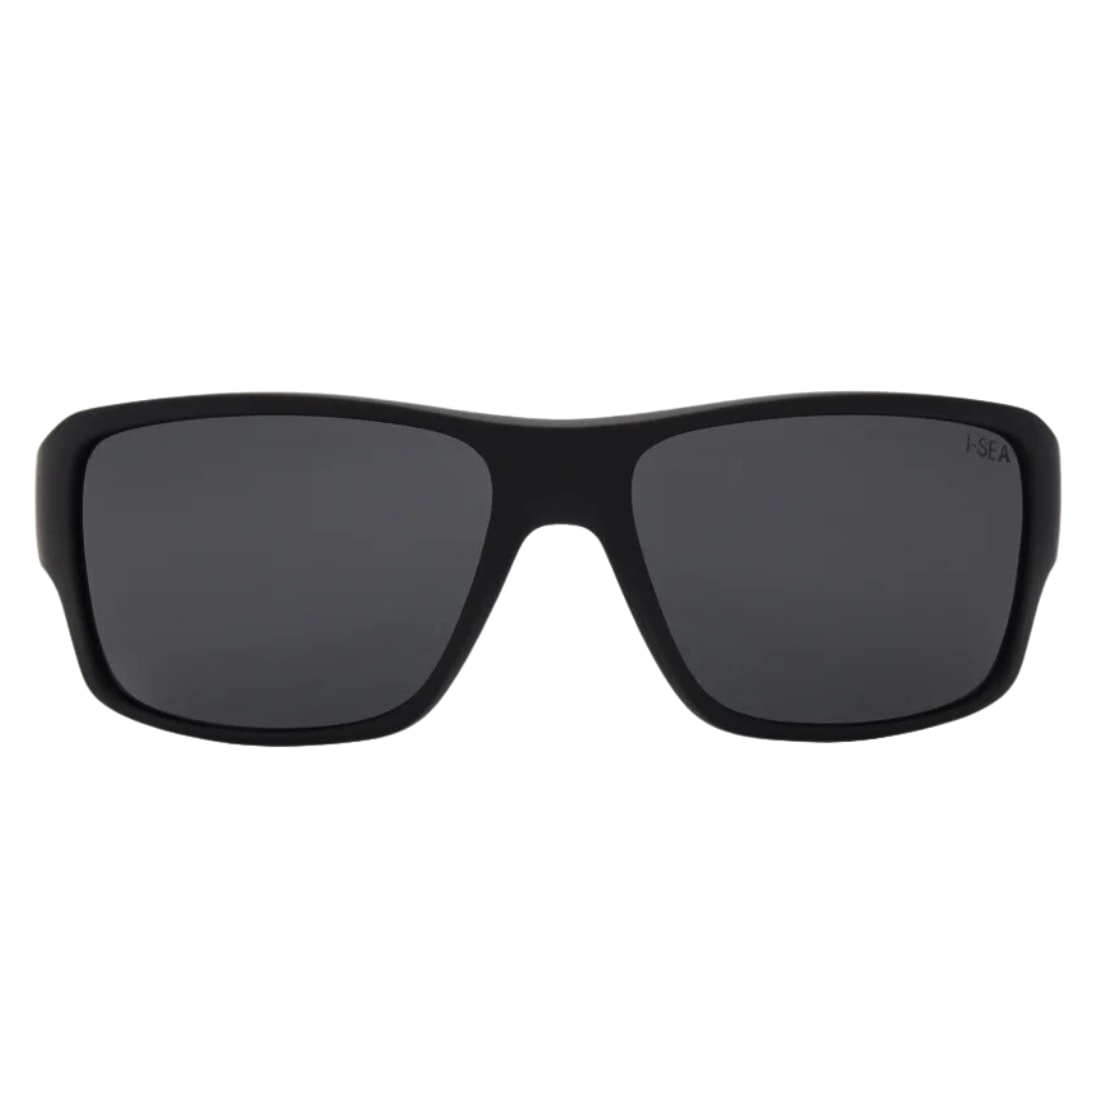 I-Sea Free Bird Wrap Around Polarised Sunglasses - Black Rubber Soft Touch/Smoke Polarized Lens - Wrap Around Sunglasses by I-Sea